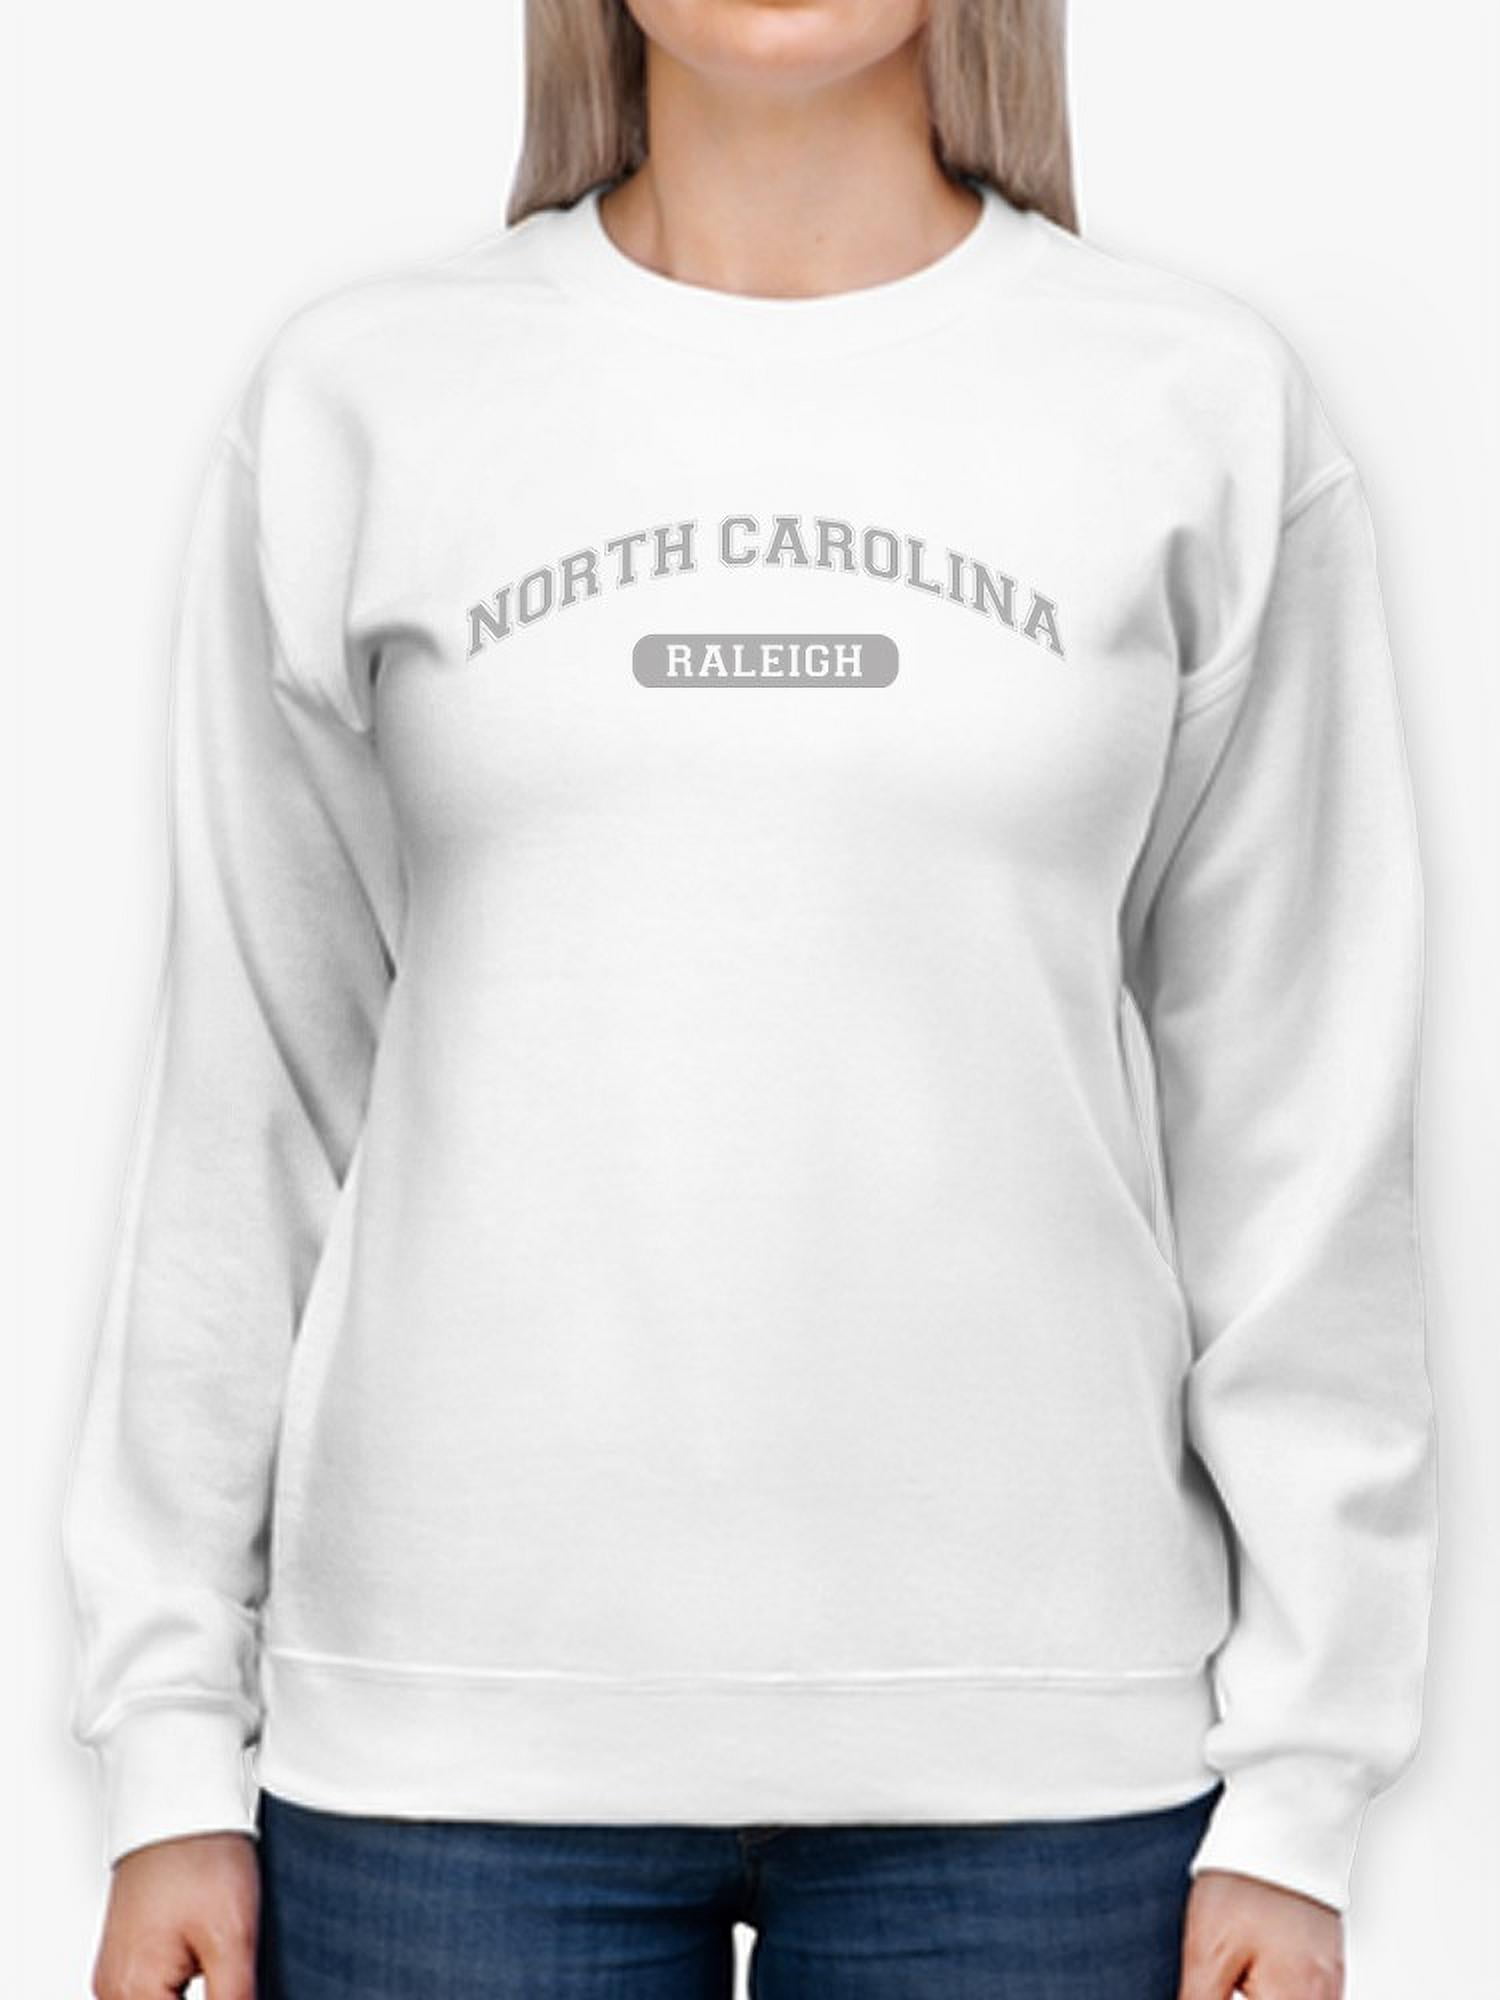 Unisex NC Sweatshirt Oversized North Carolina Shirts Home State,Women,Comfortable and Soft,Winter Pullover,Fall Pullover Sweatshirt